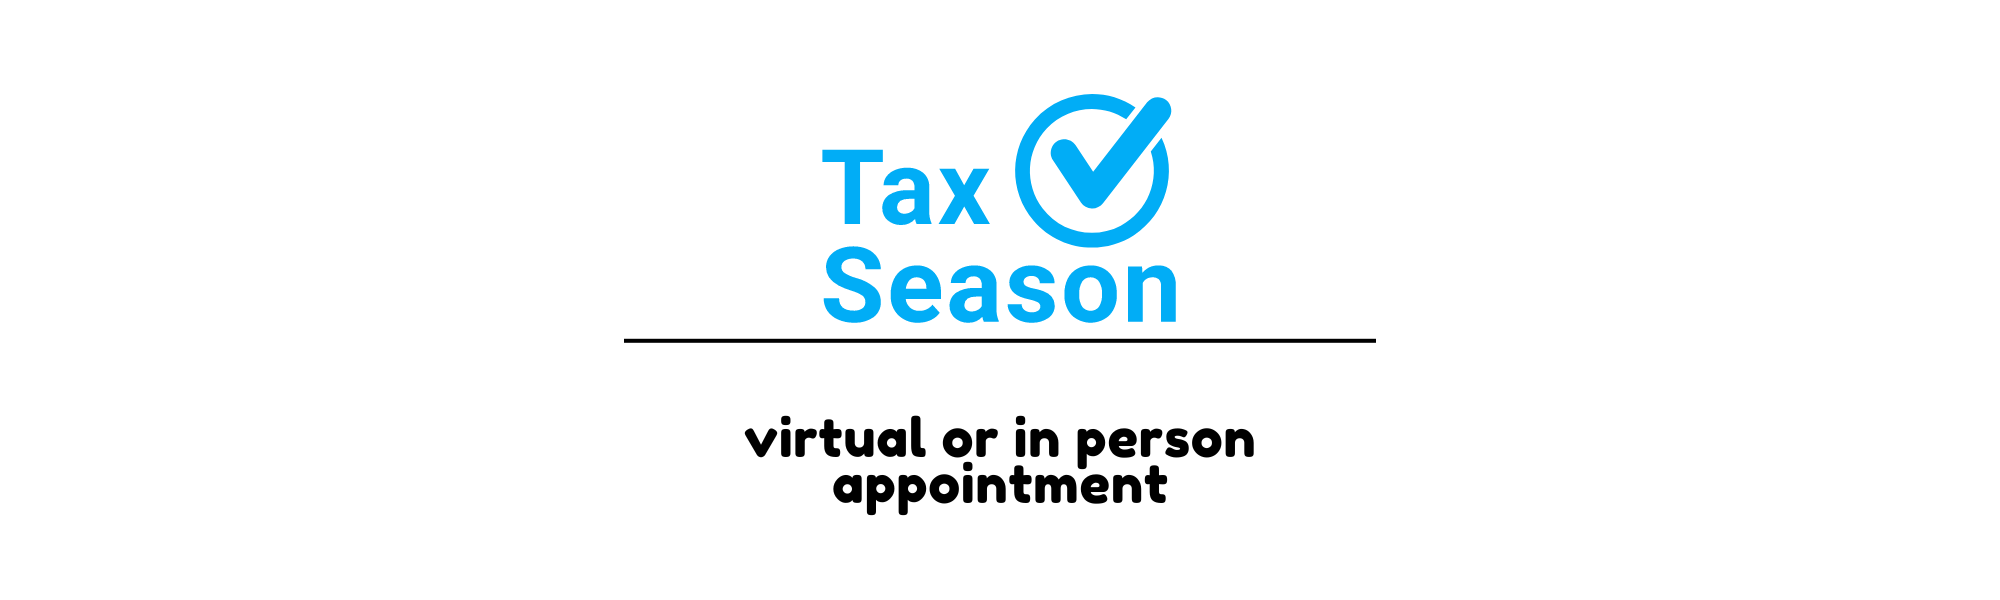 tax season appointment